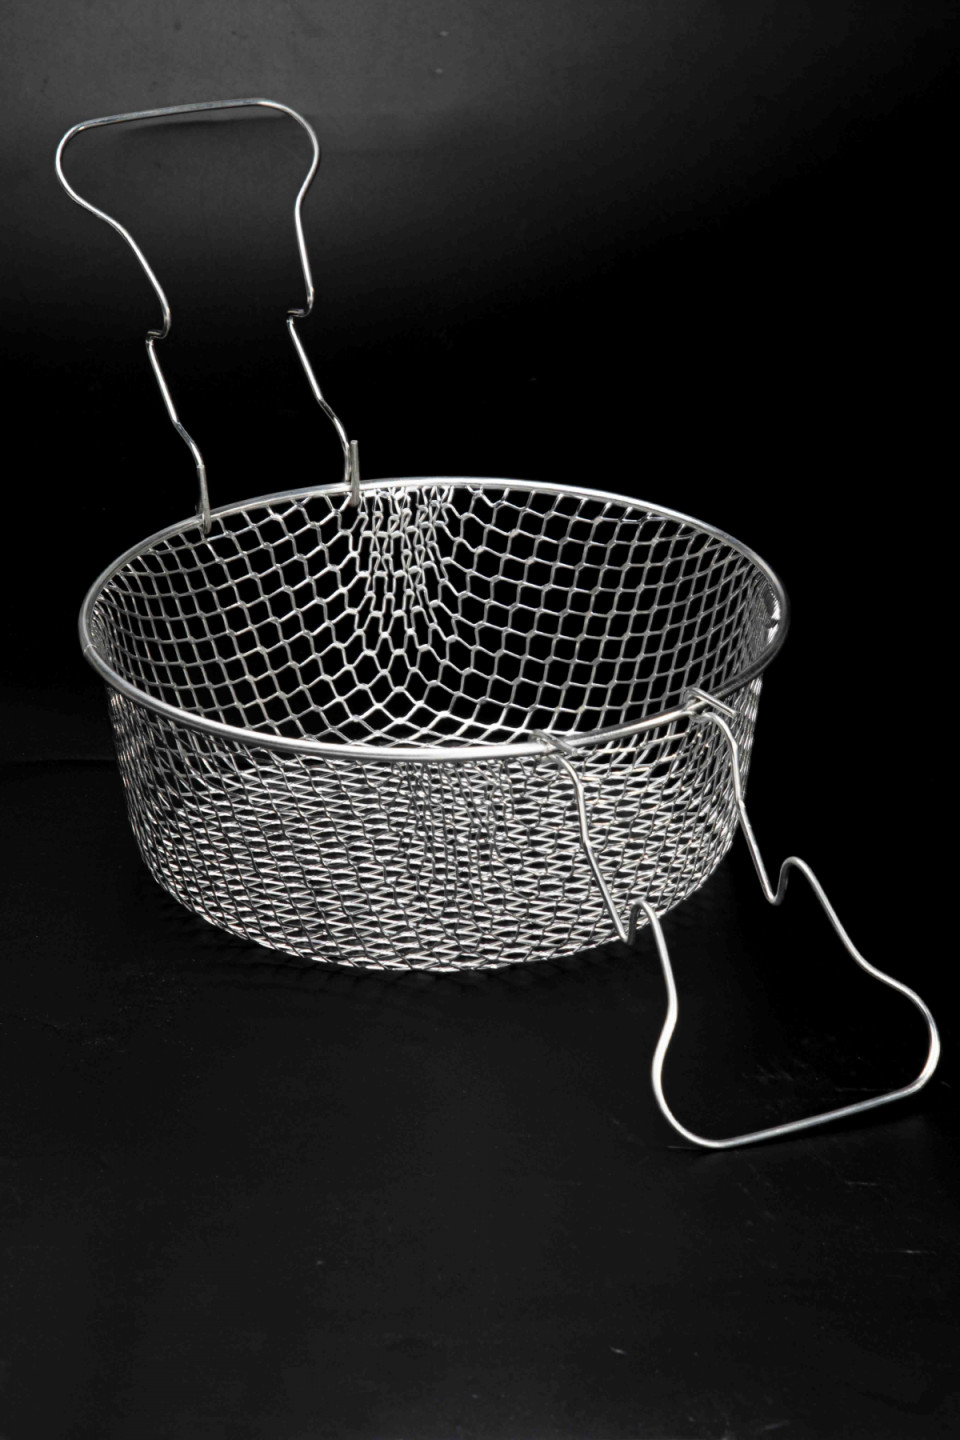 Kızartma Sepeti / Frying Basket